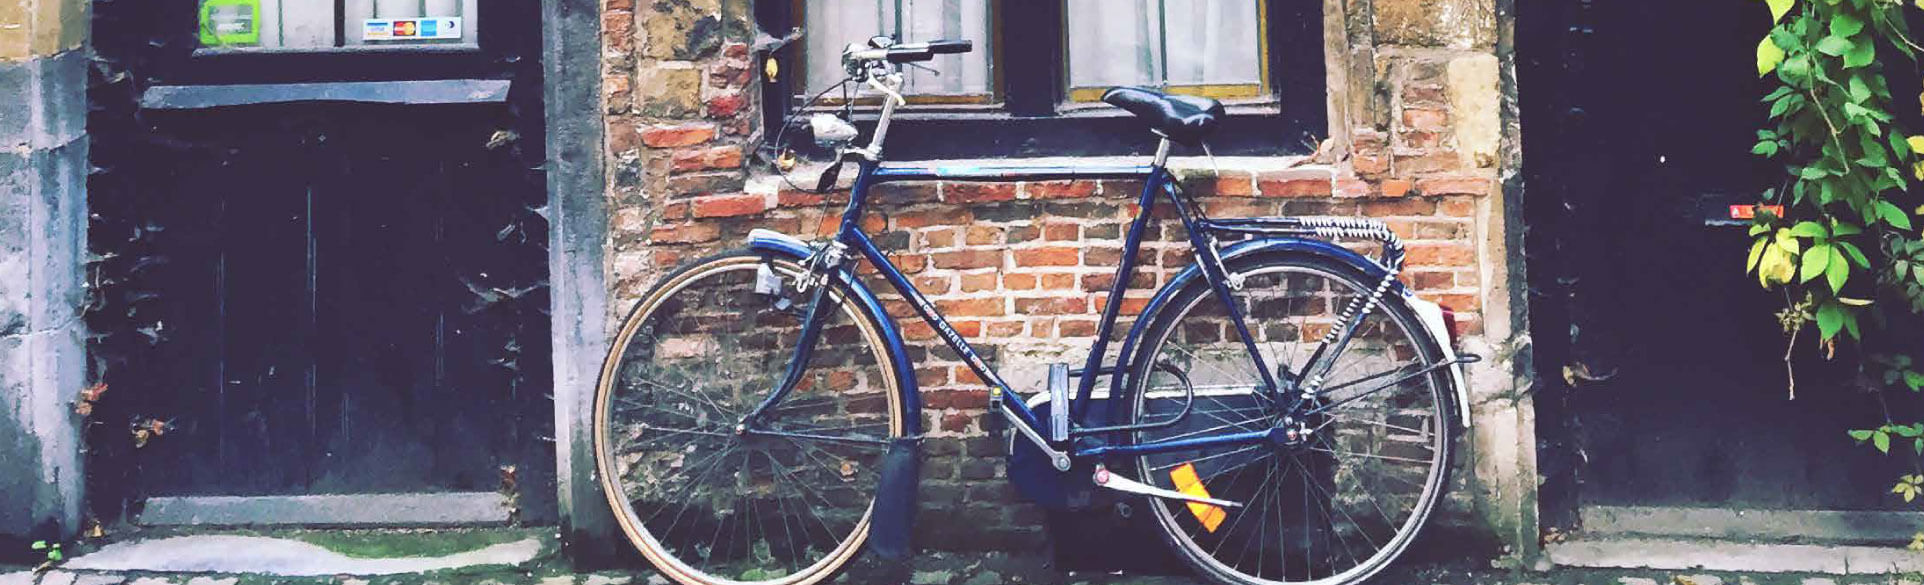 Bike through Amsterdam with SWISSGEAR